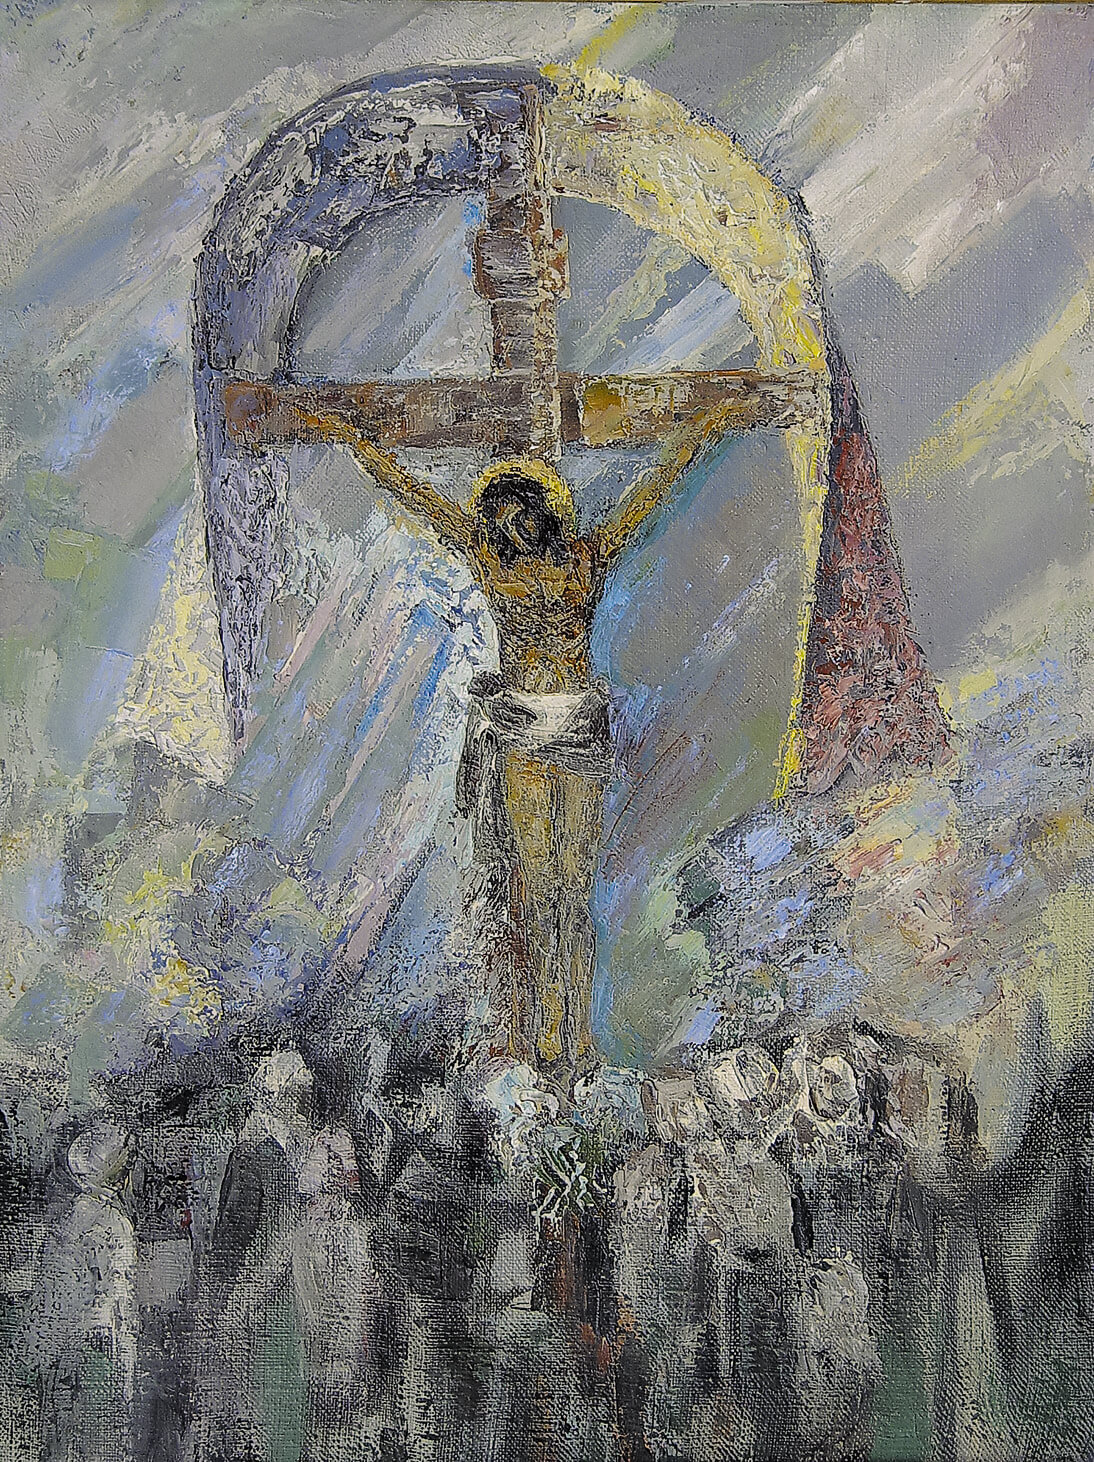 Crucifix. Mararmureş. Painting by Vasile cojocaru